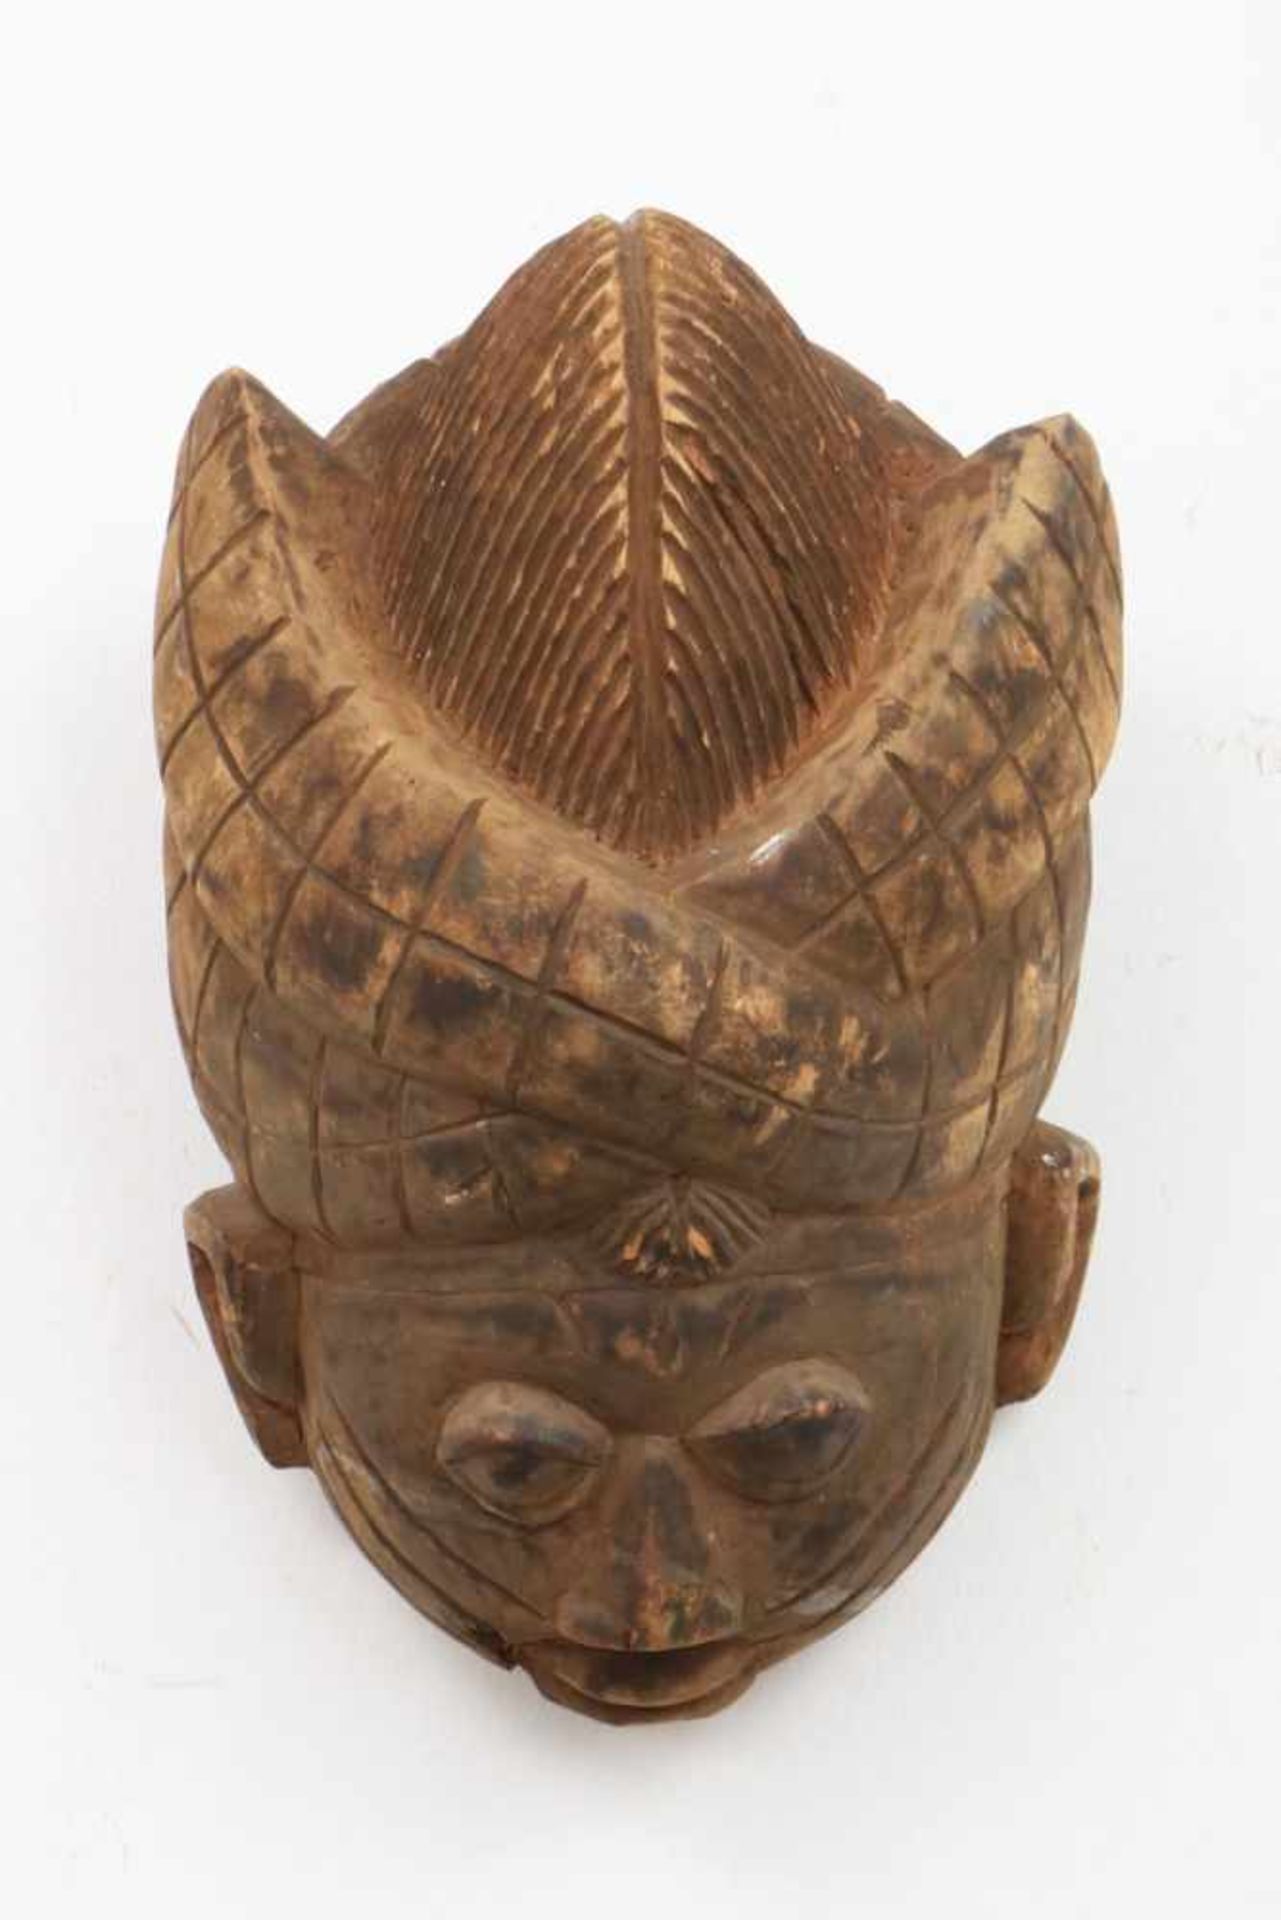 Afrikanische Ritualmaskewohl Zentralafrika, haubenförmiger Kopfschmuck mit Kerbdekor, H ca. 40cm